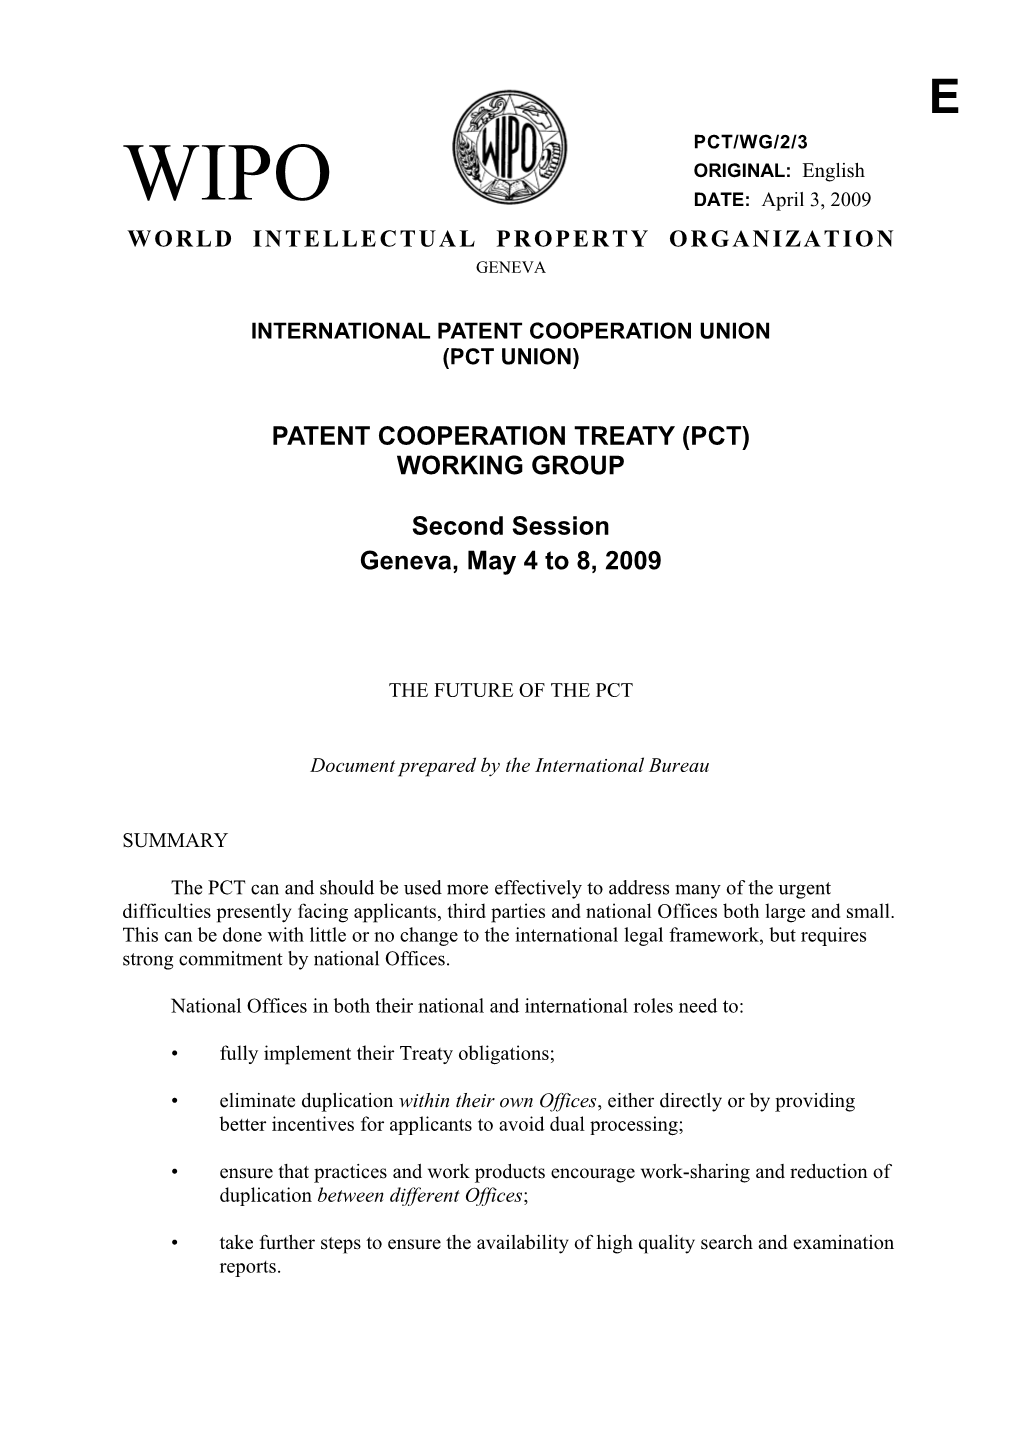 International Patent Cooperation Union (Pct Union)